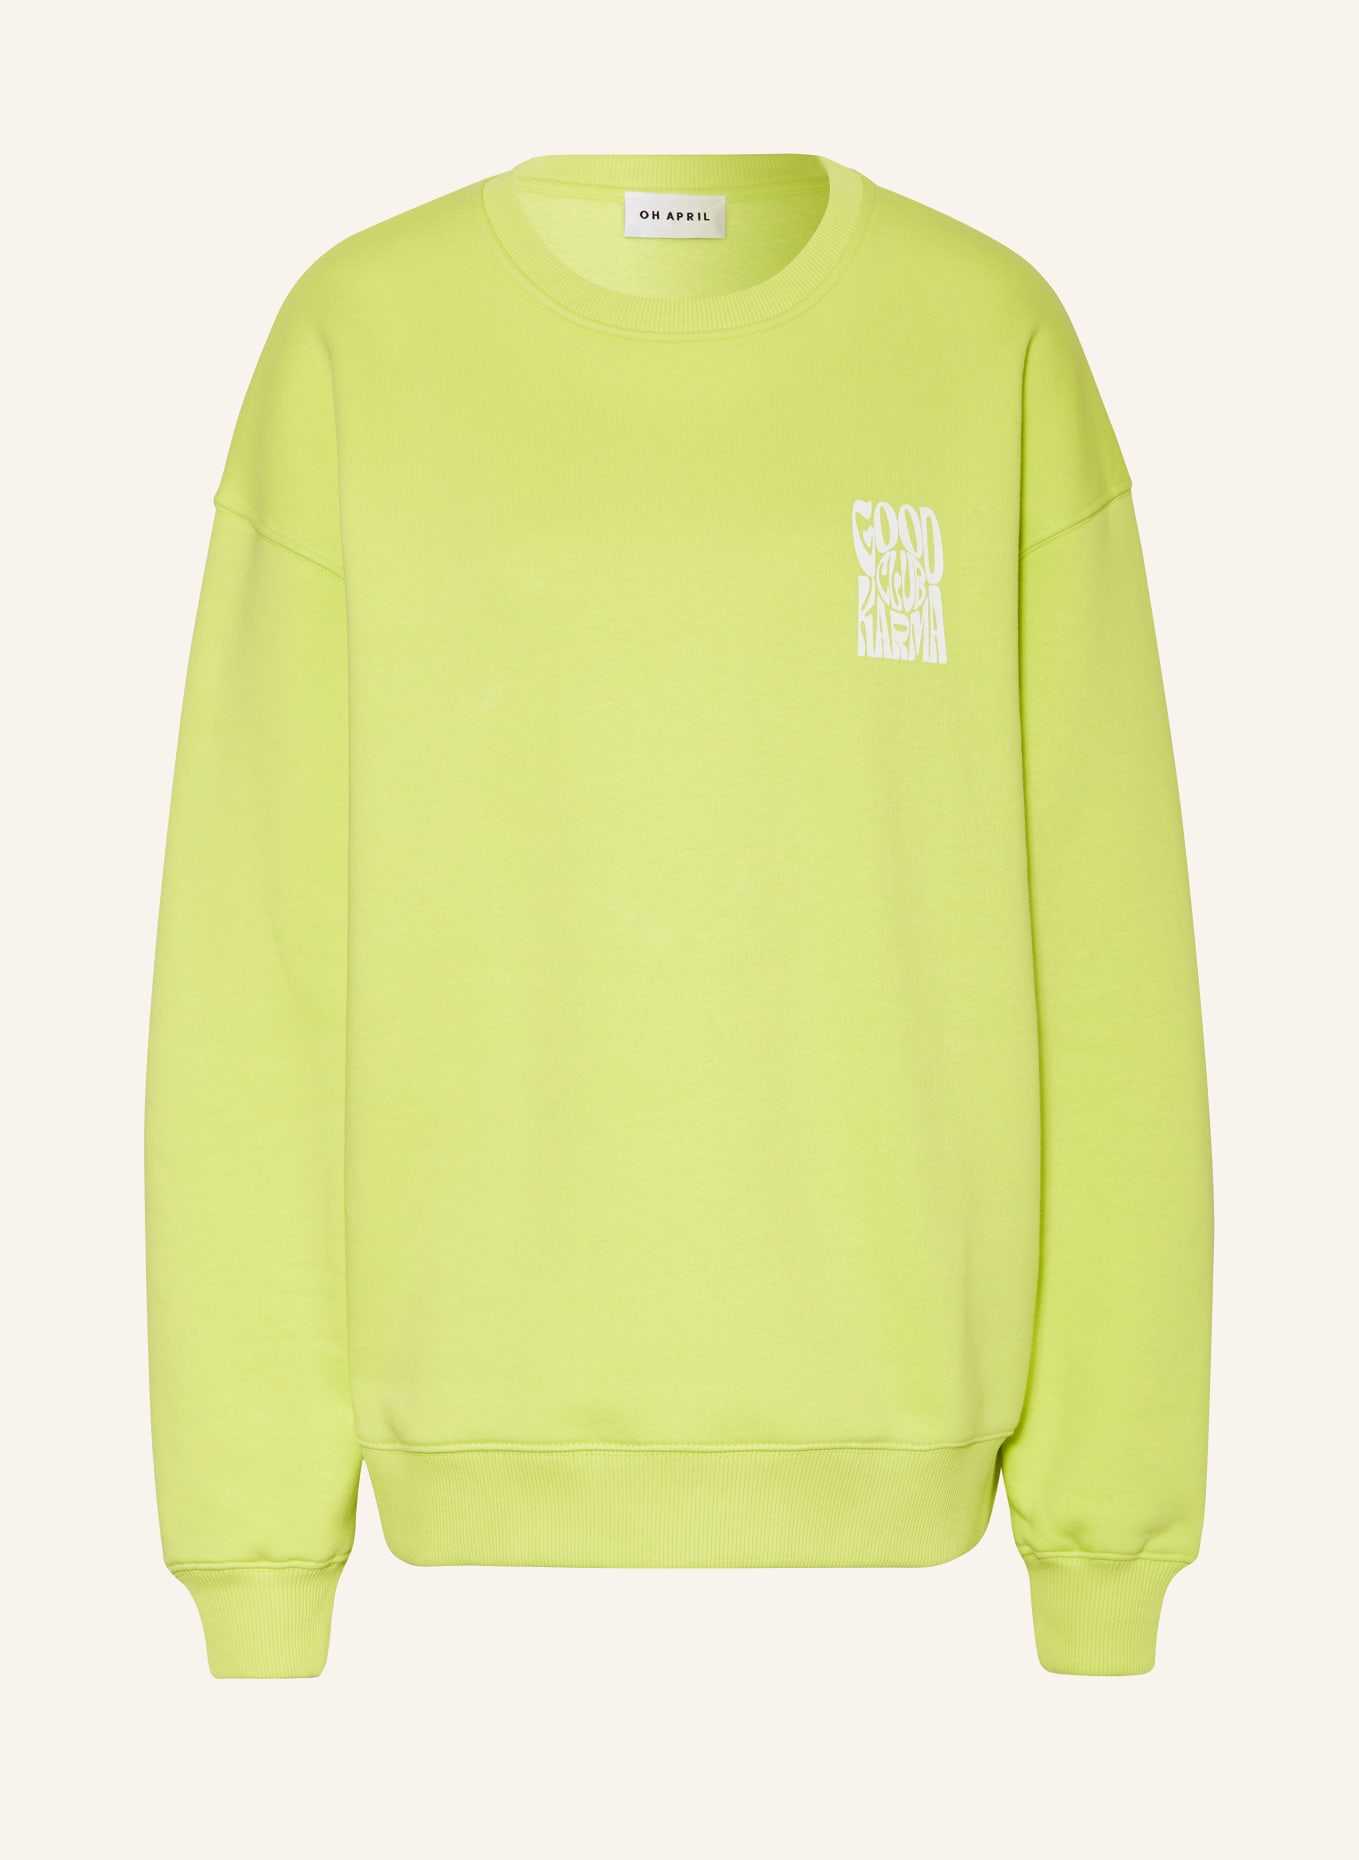 OH APRIL Oversized-Sweatshirt GOOD KARMA CLUB, Farbe: LIME LIME (Bild 1)